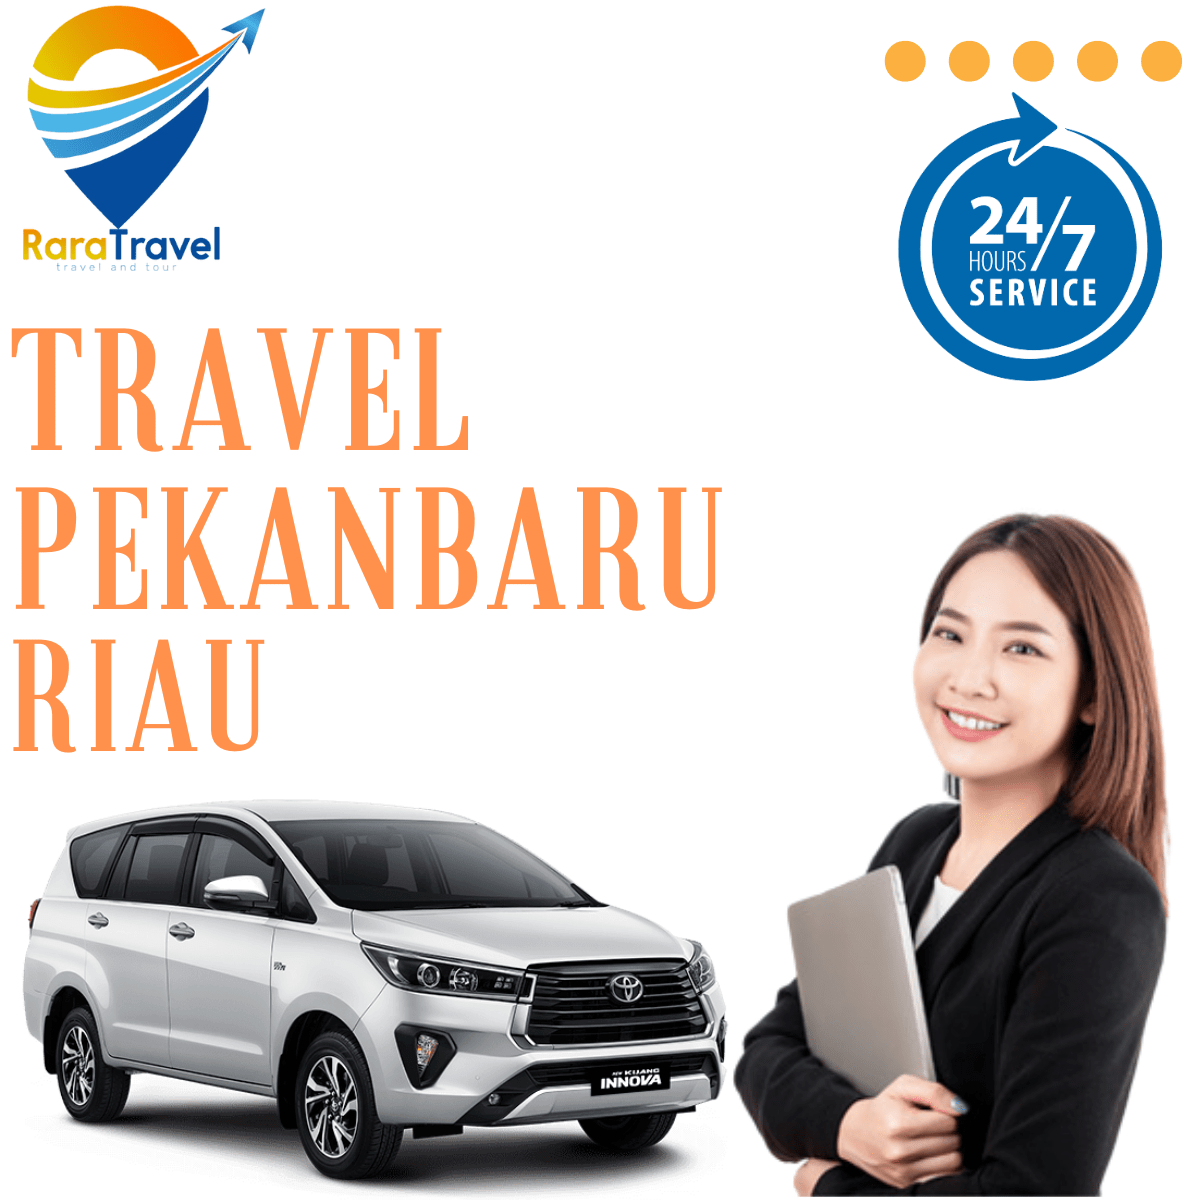 Travel Pekanbaru Riau, Harga Tiket Murah - RaraTravel.ID